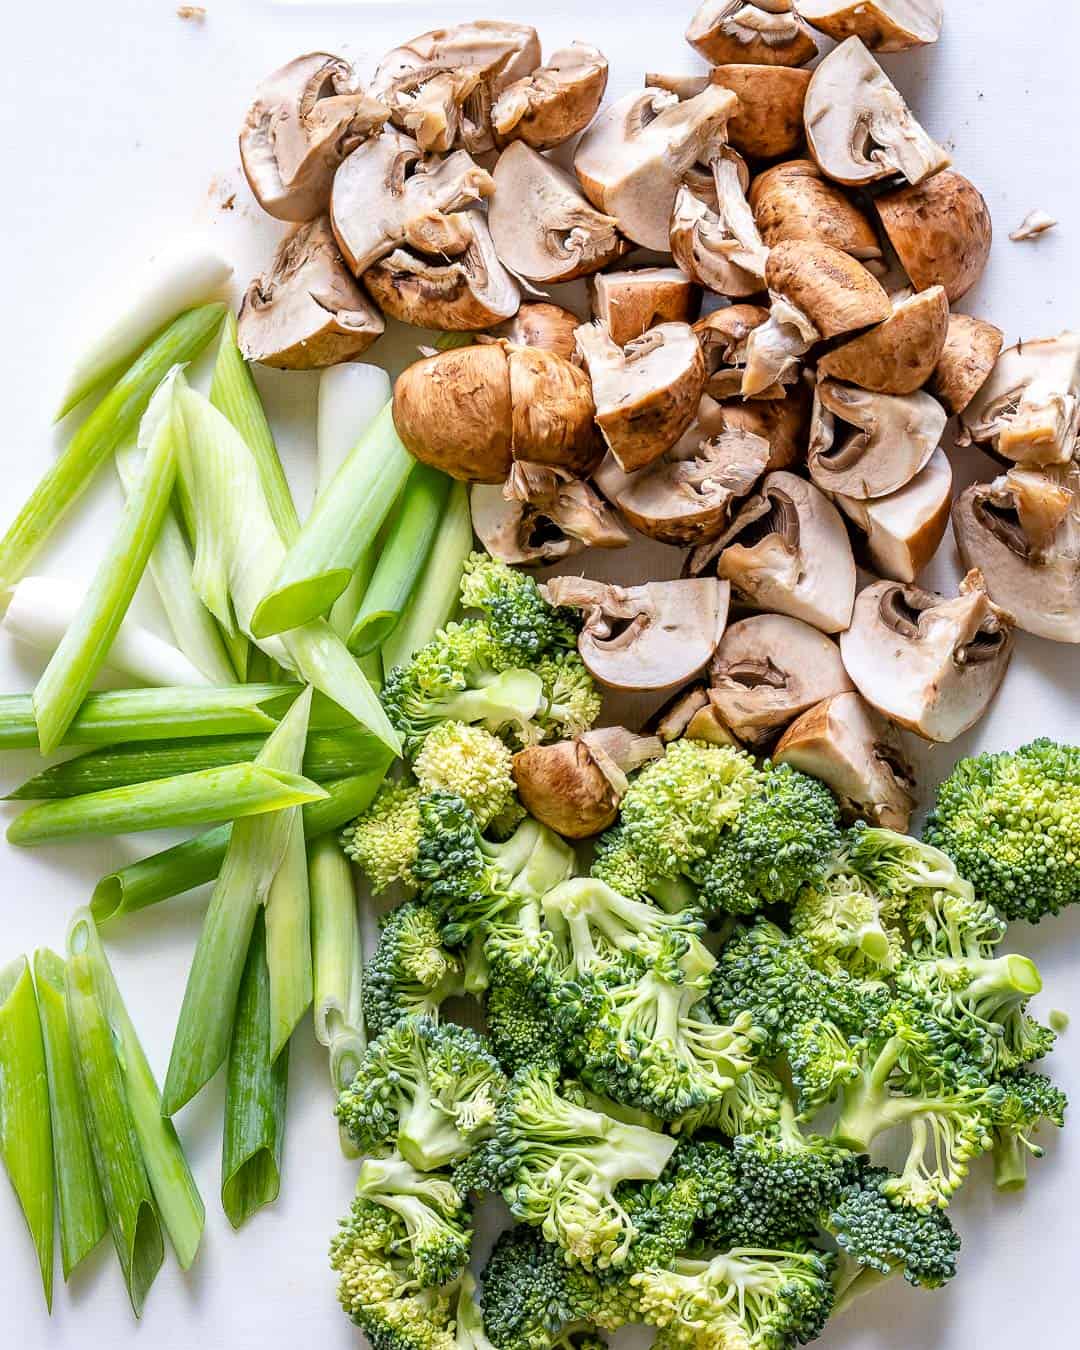 Mushrooms, broccoli, and green onions cut for stir fry. 